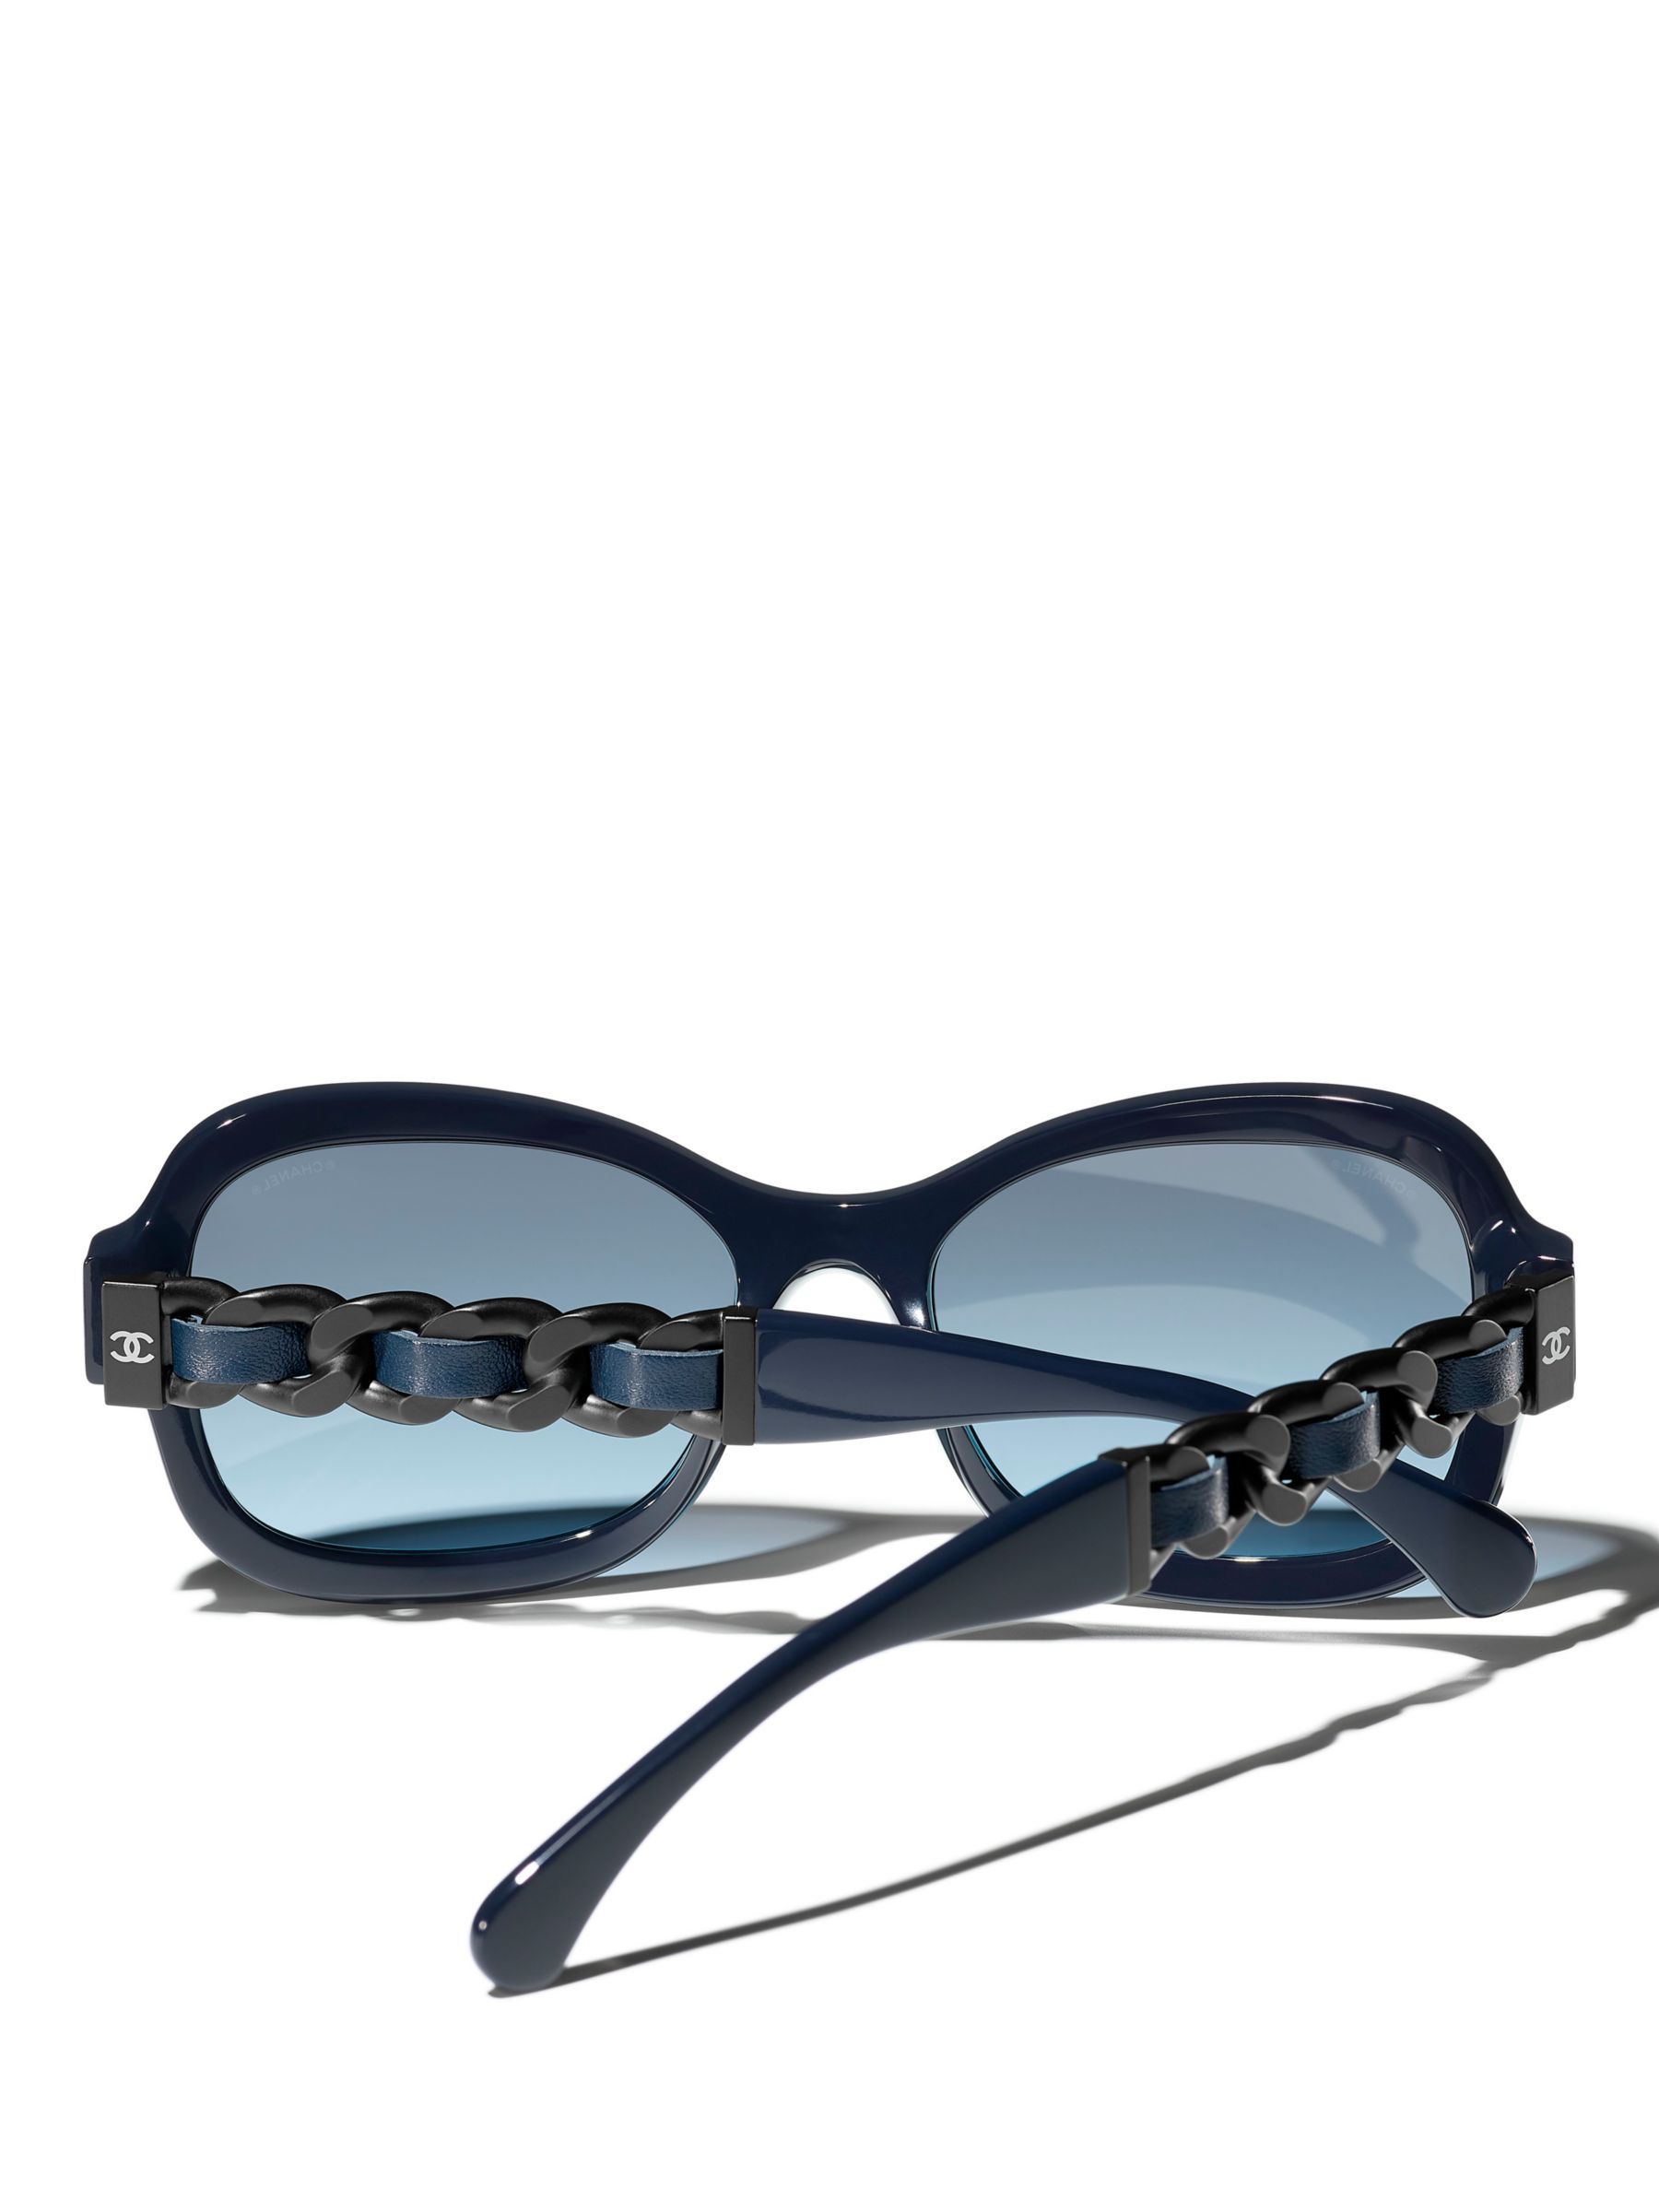 Buy Chanel Sunglasses Online